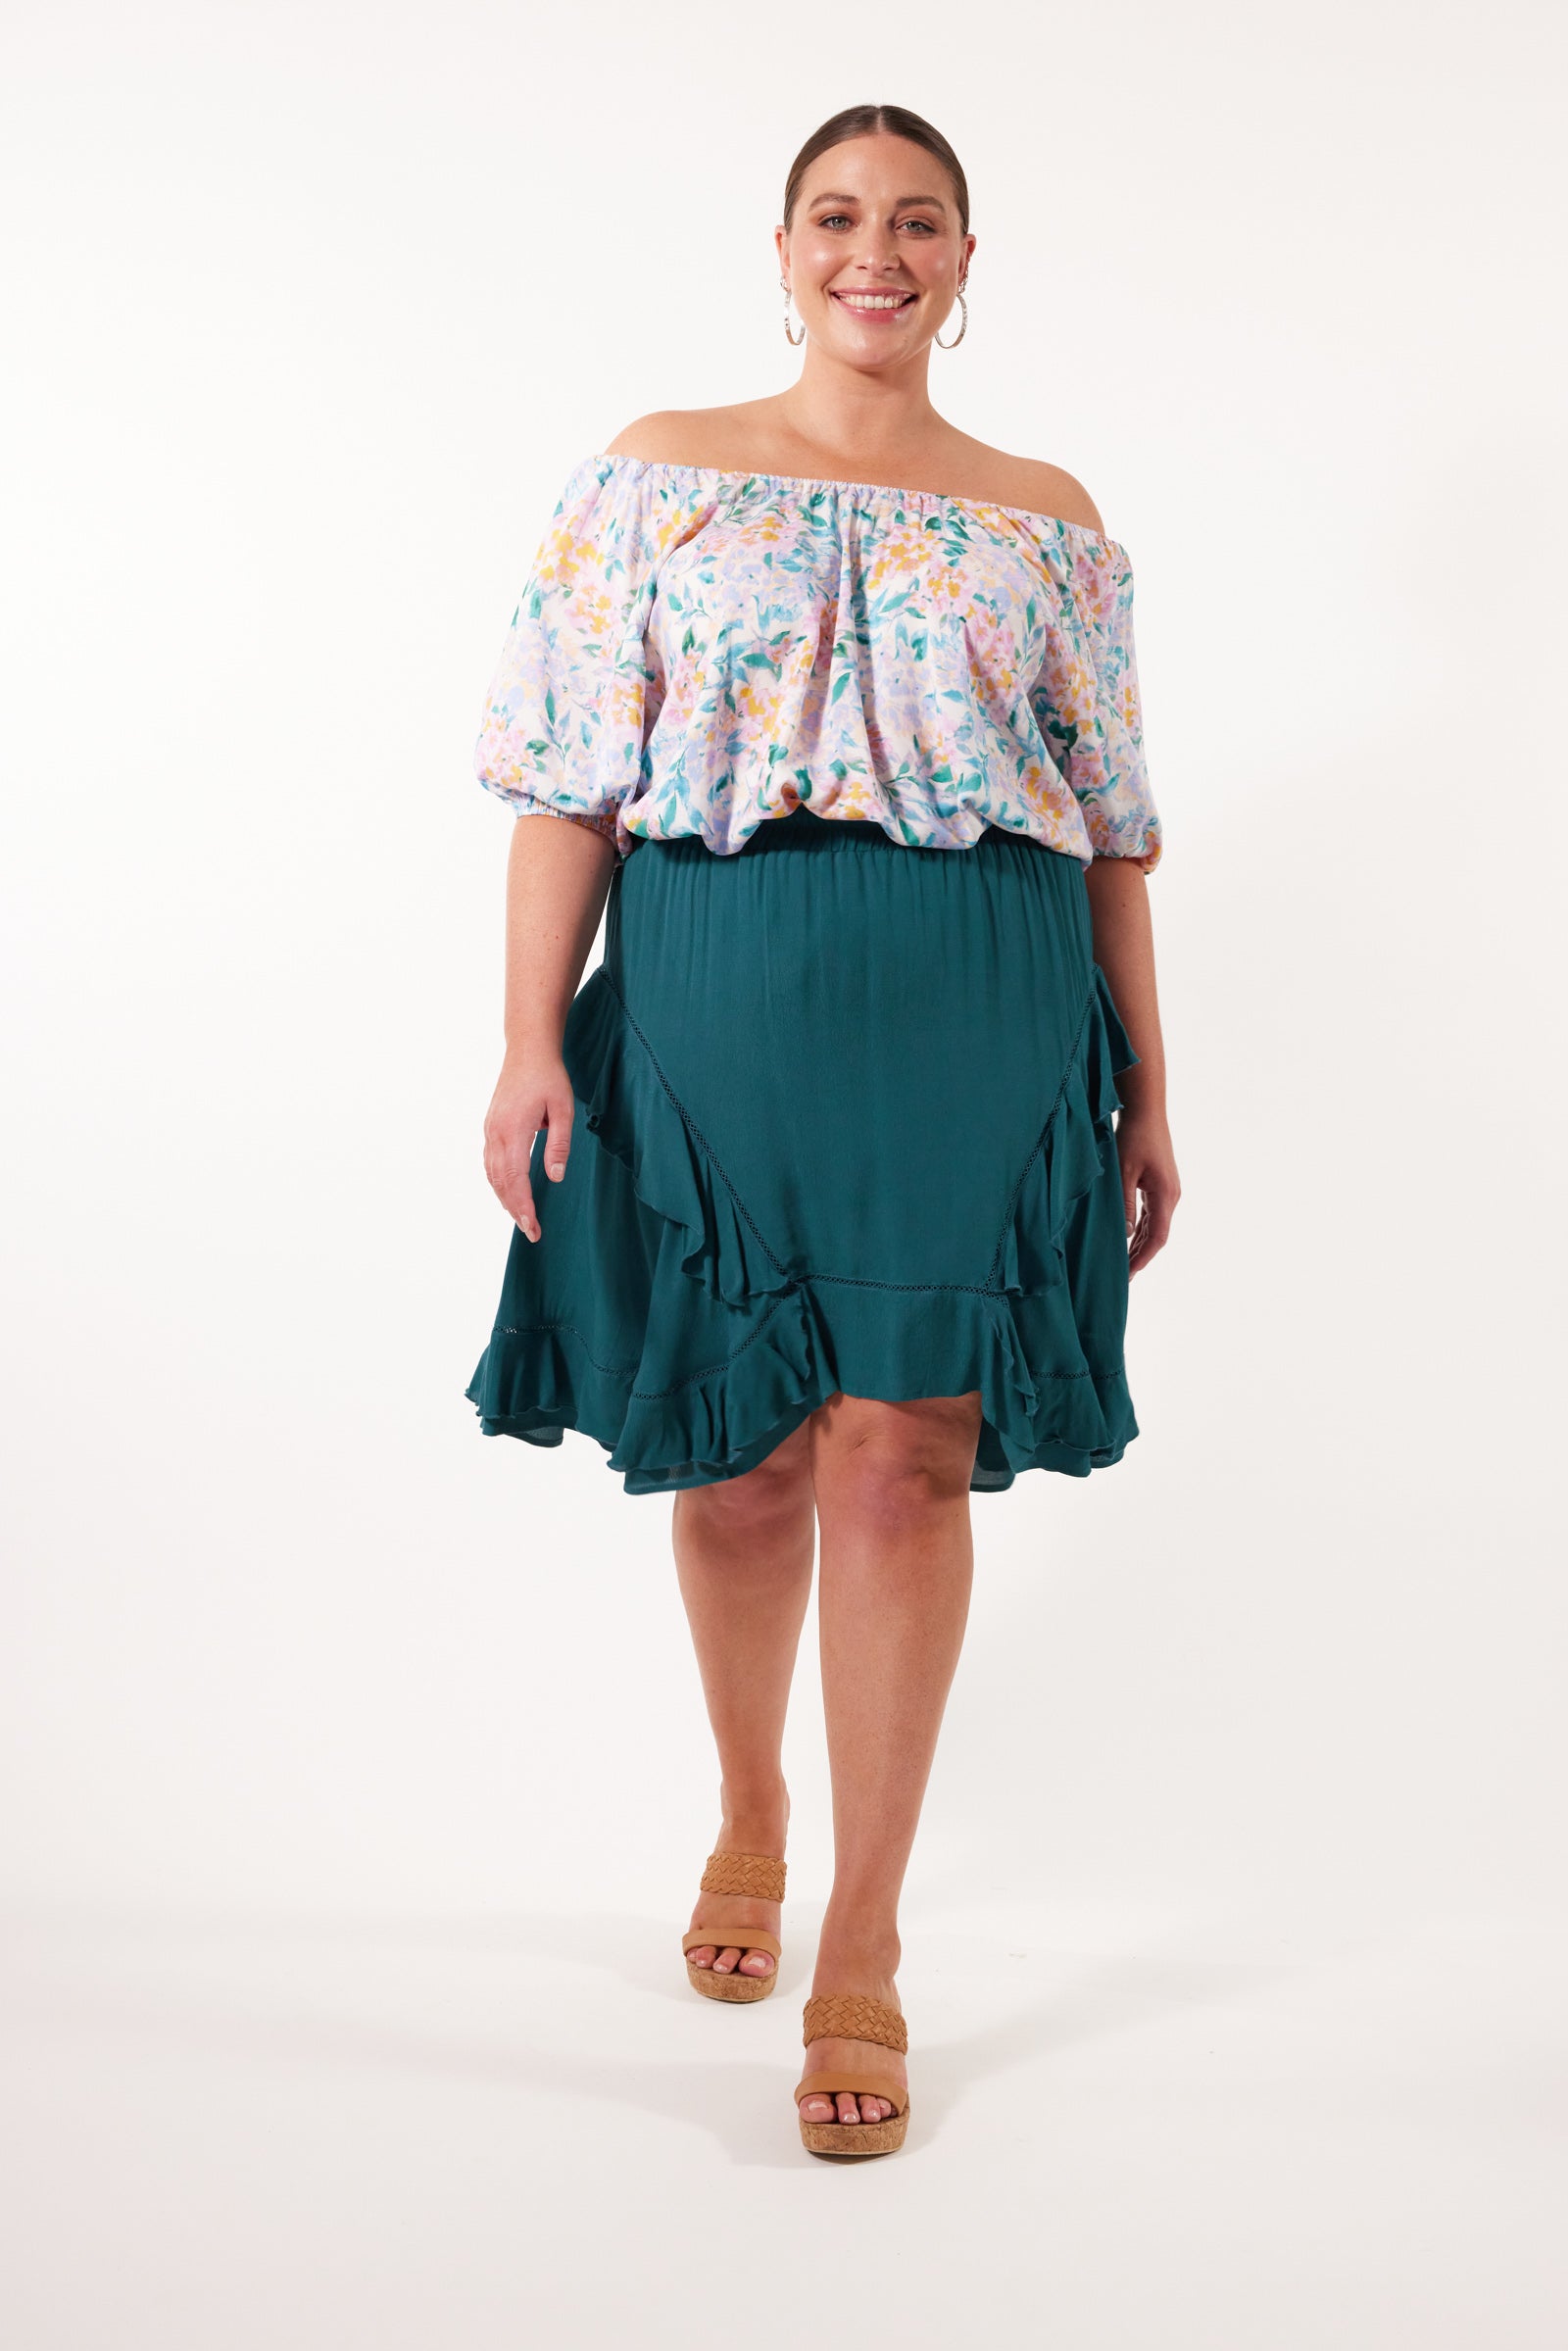 Botanical Skirt - Teal - Isle of Mine Clothing - Skirt Mini